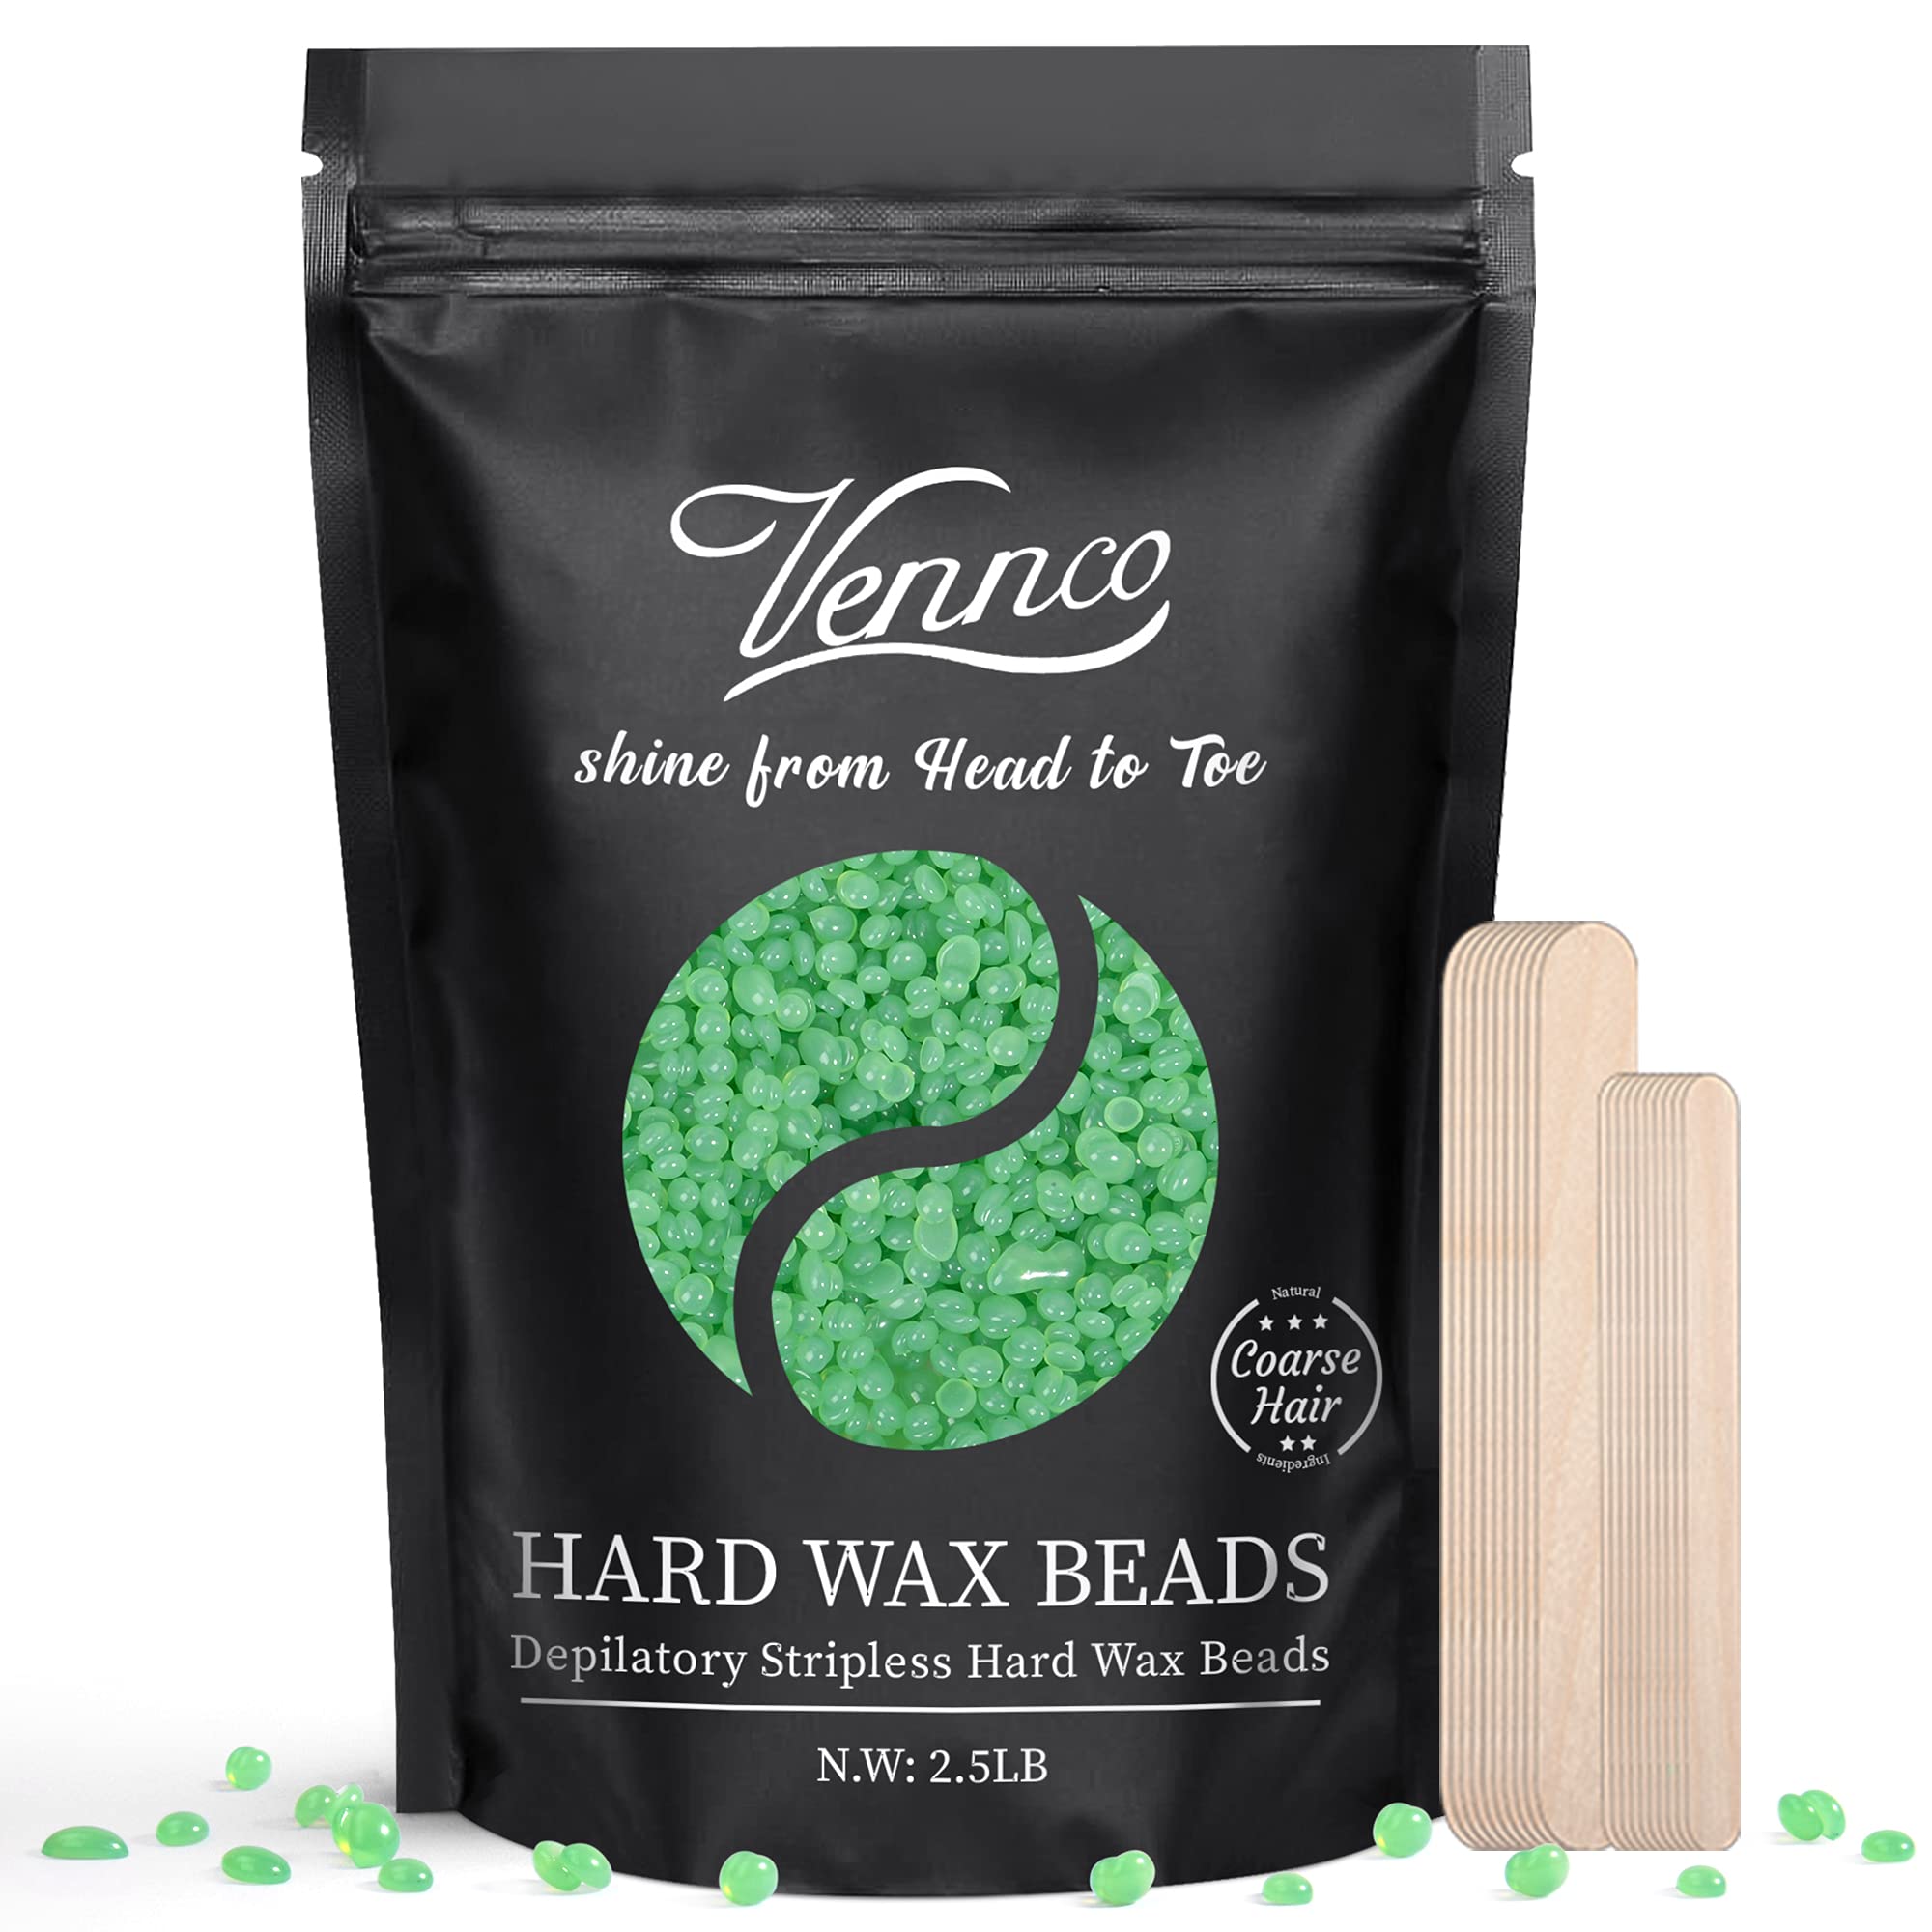 2.5lb Hard Wax Beads, Vennco Wax Beans for Coarse Hair Removal, At Home  Self Waxing Beads for Underarms, Legs, Facial, Eyebrows, Bikini and  Brazilian Wax, Large Refill Wax for Wax Warmer Kit